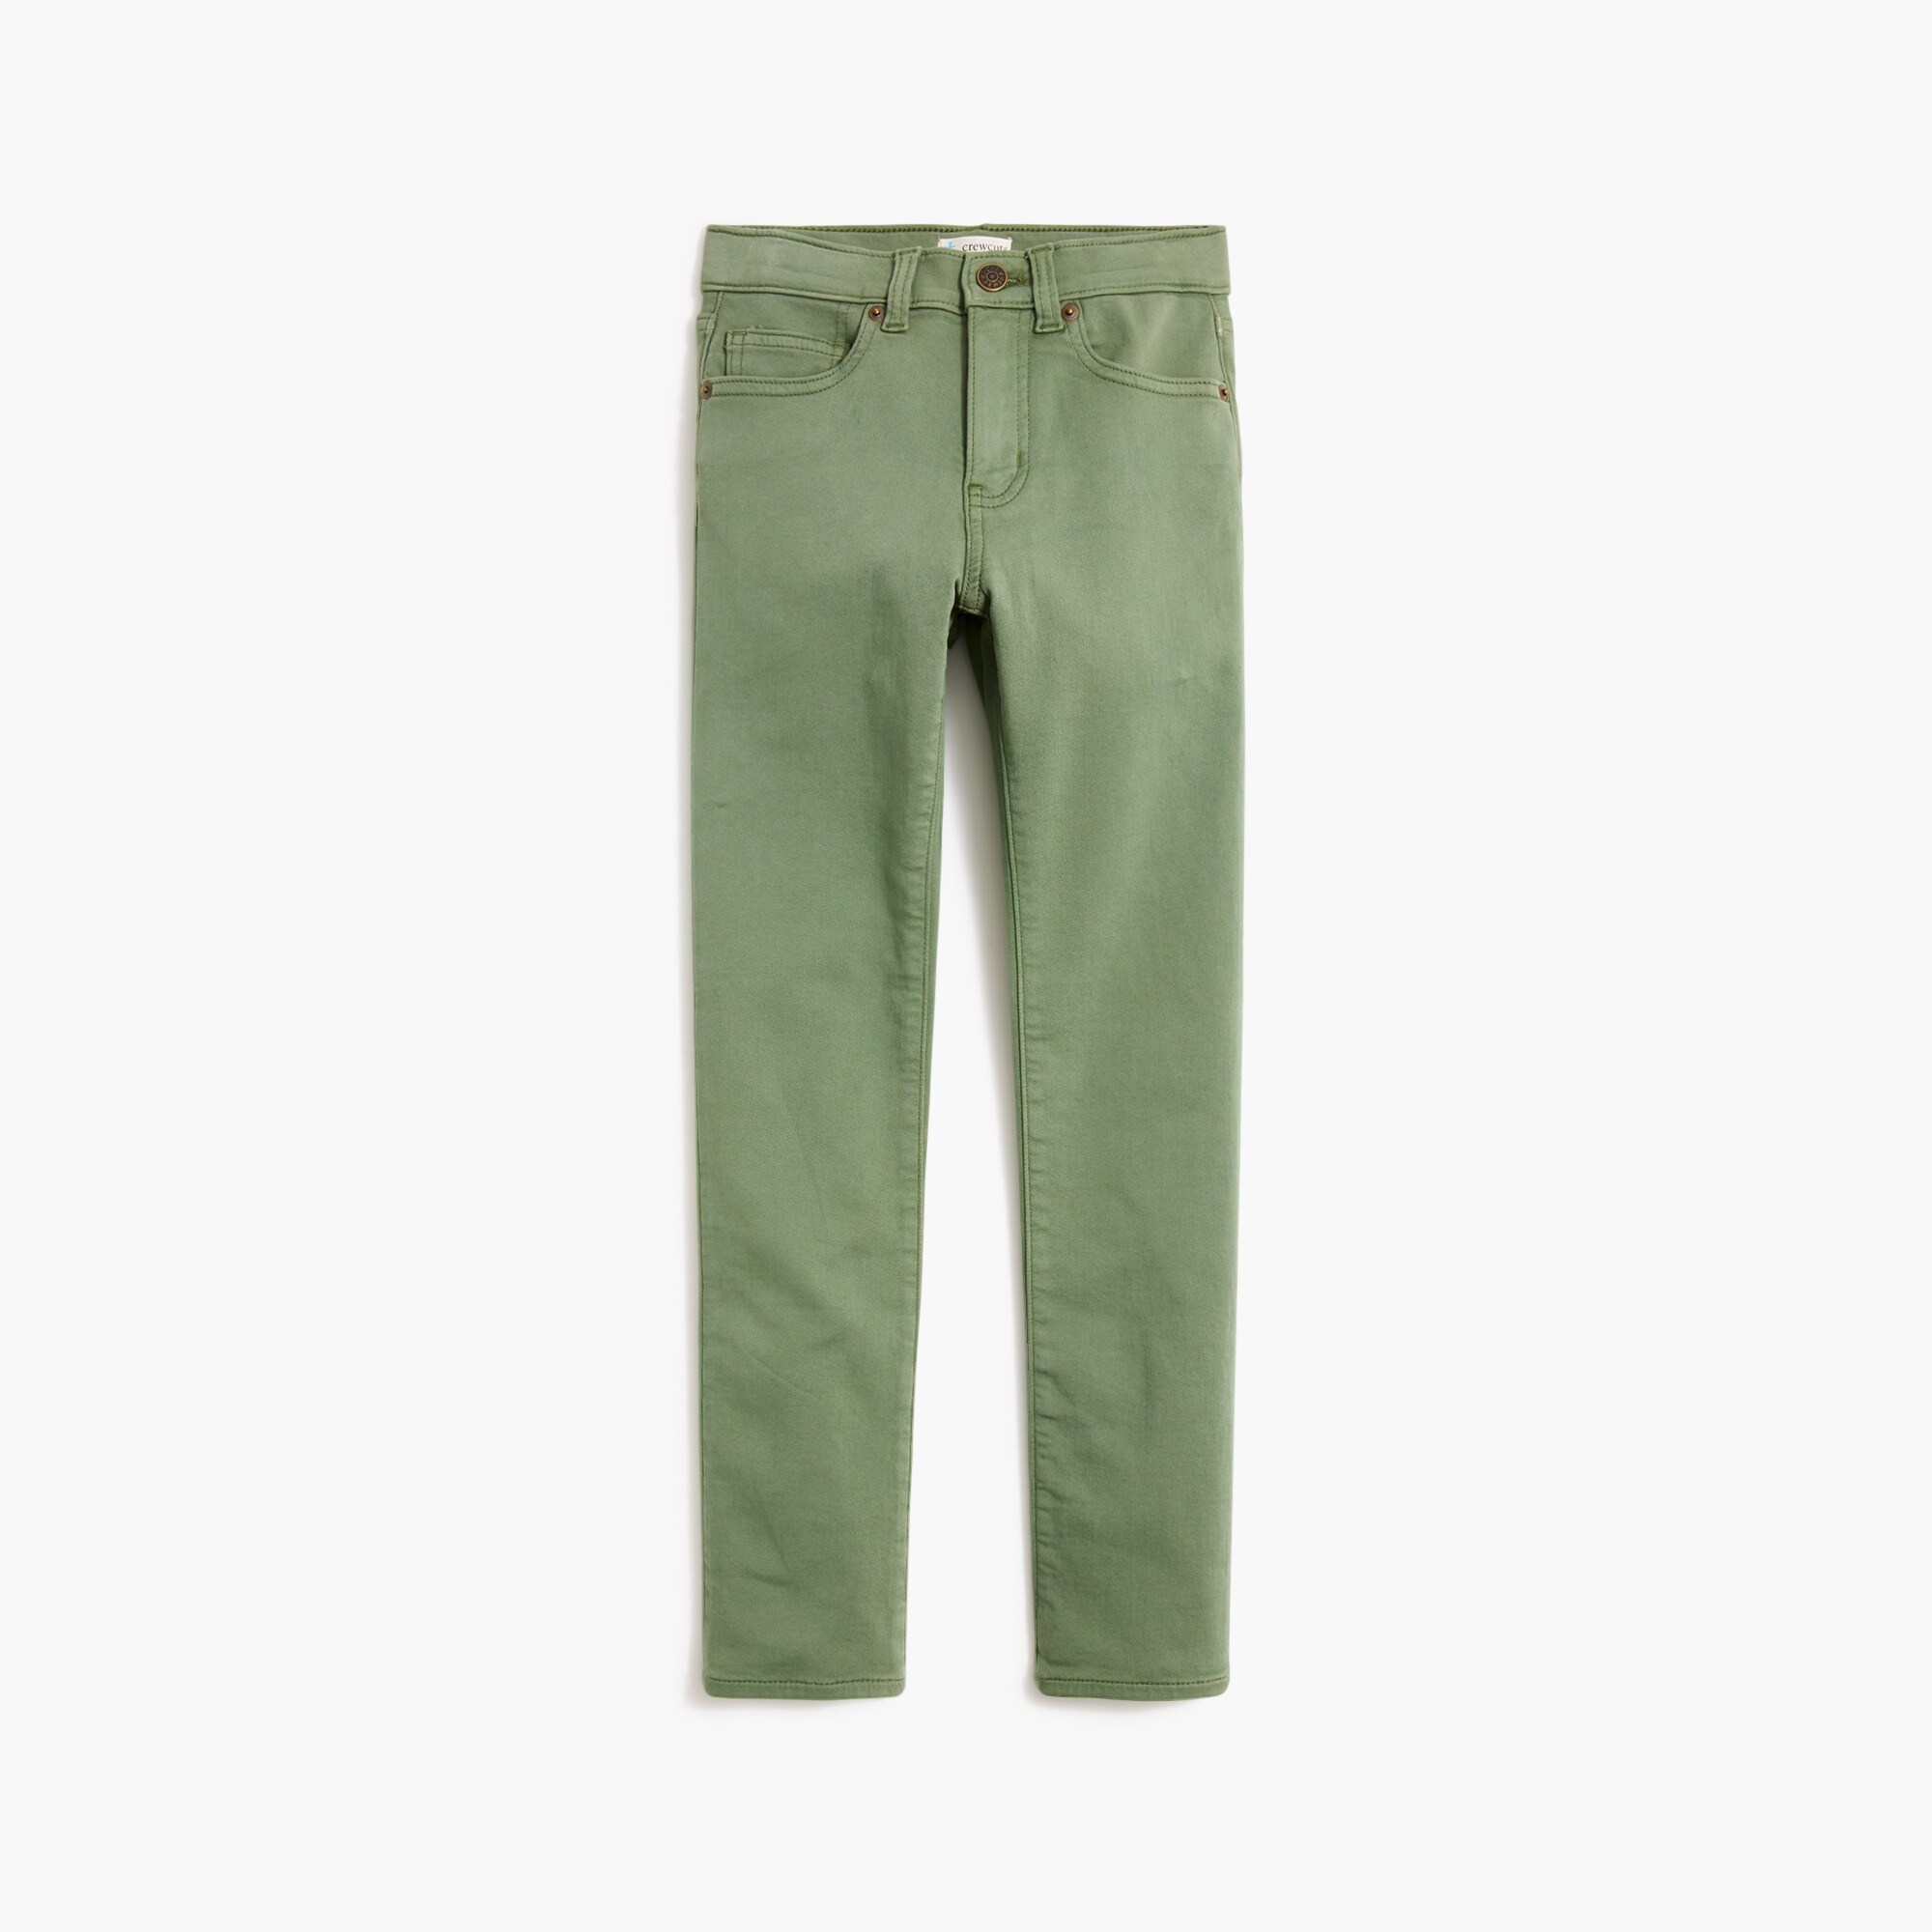  Boys' slim-fit garment-dyed jean